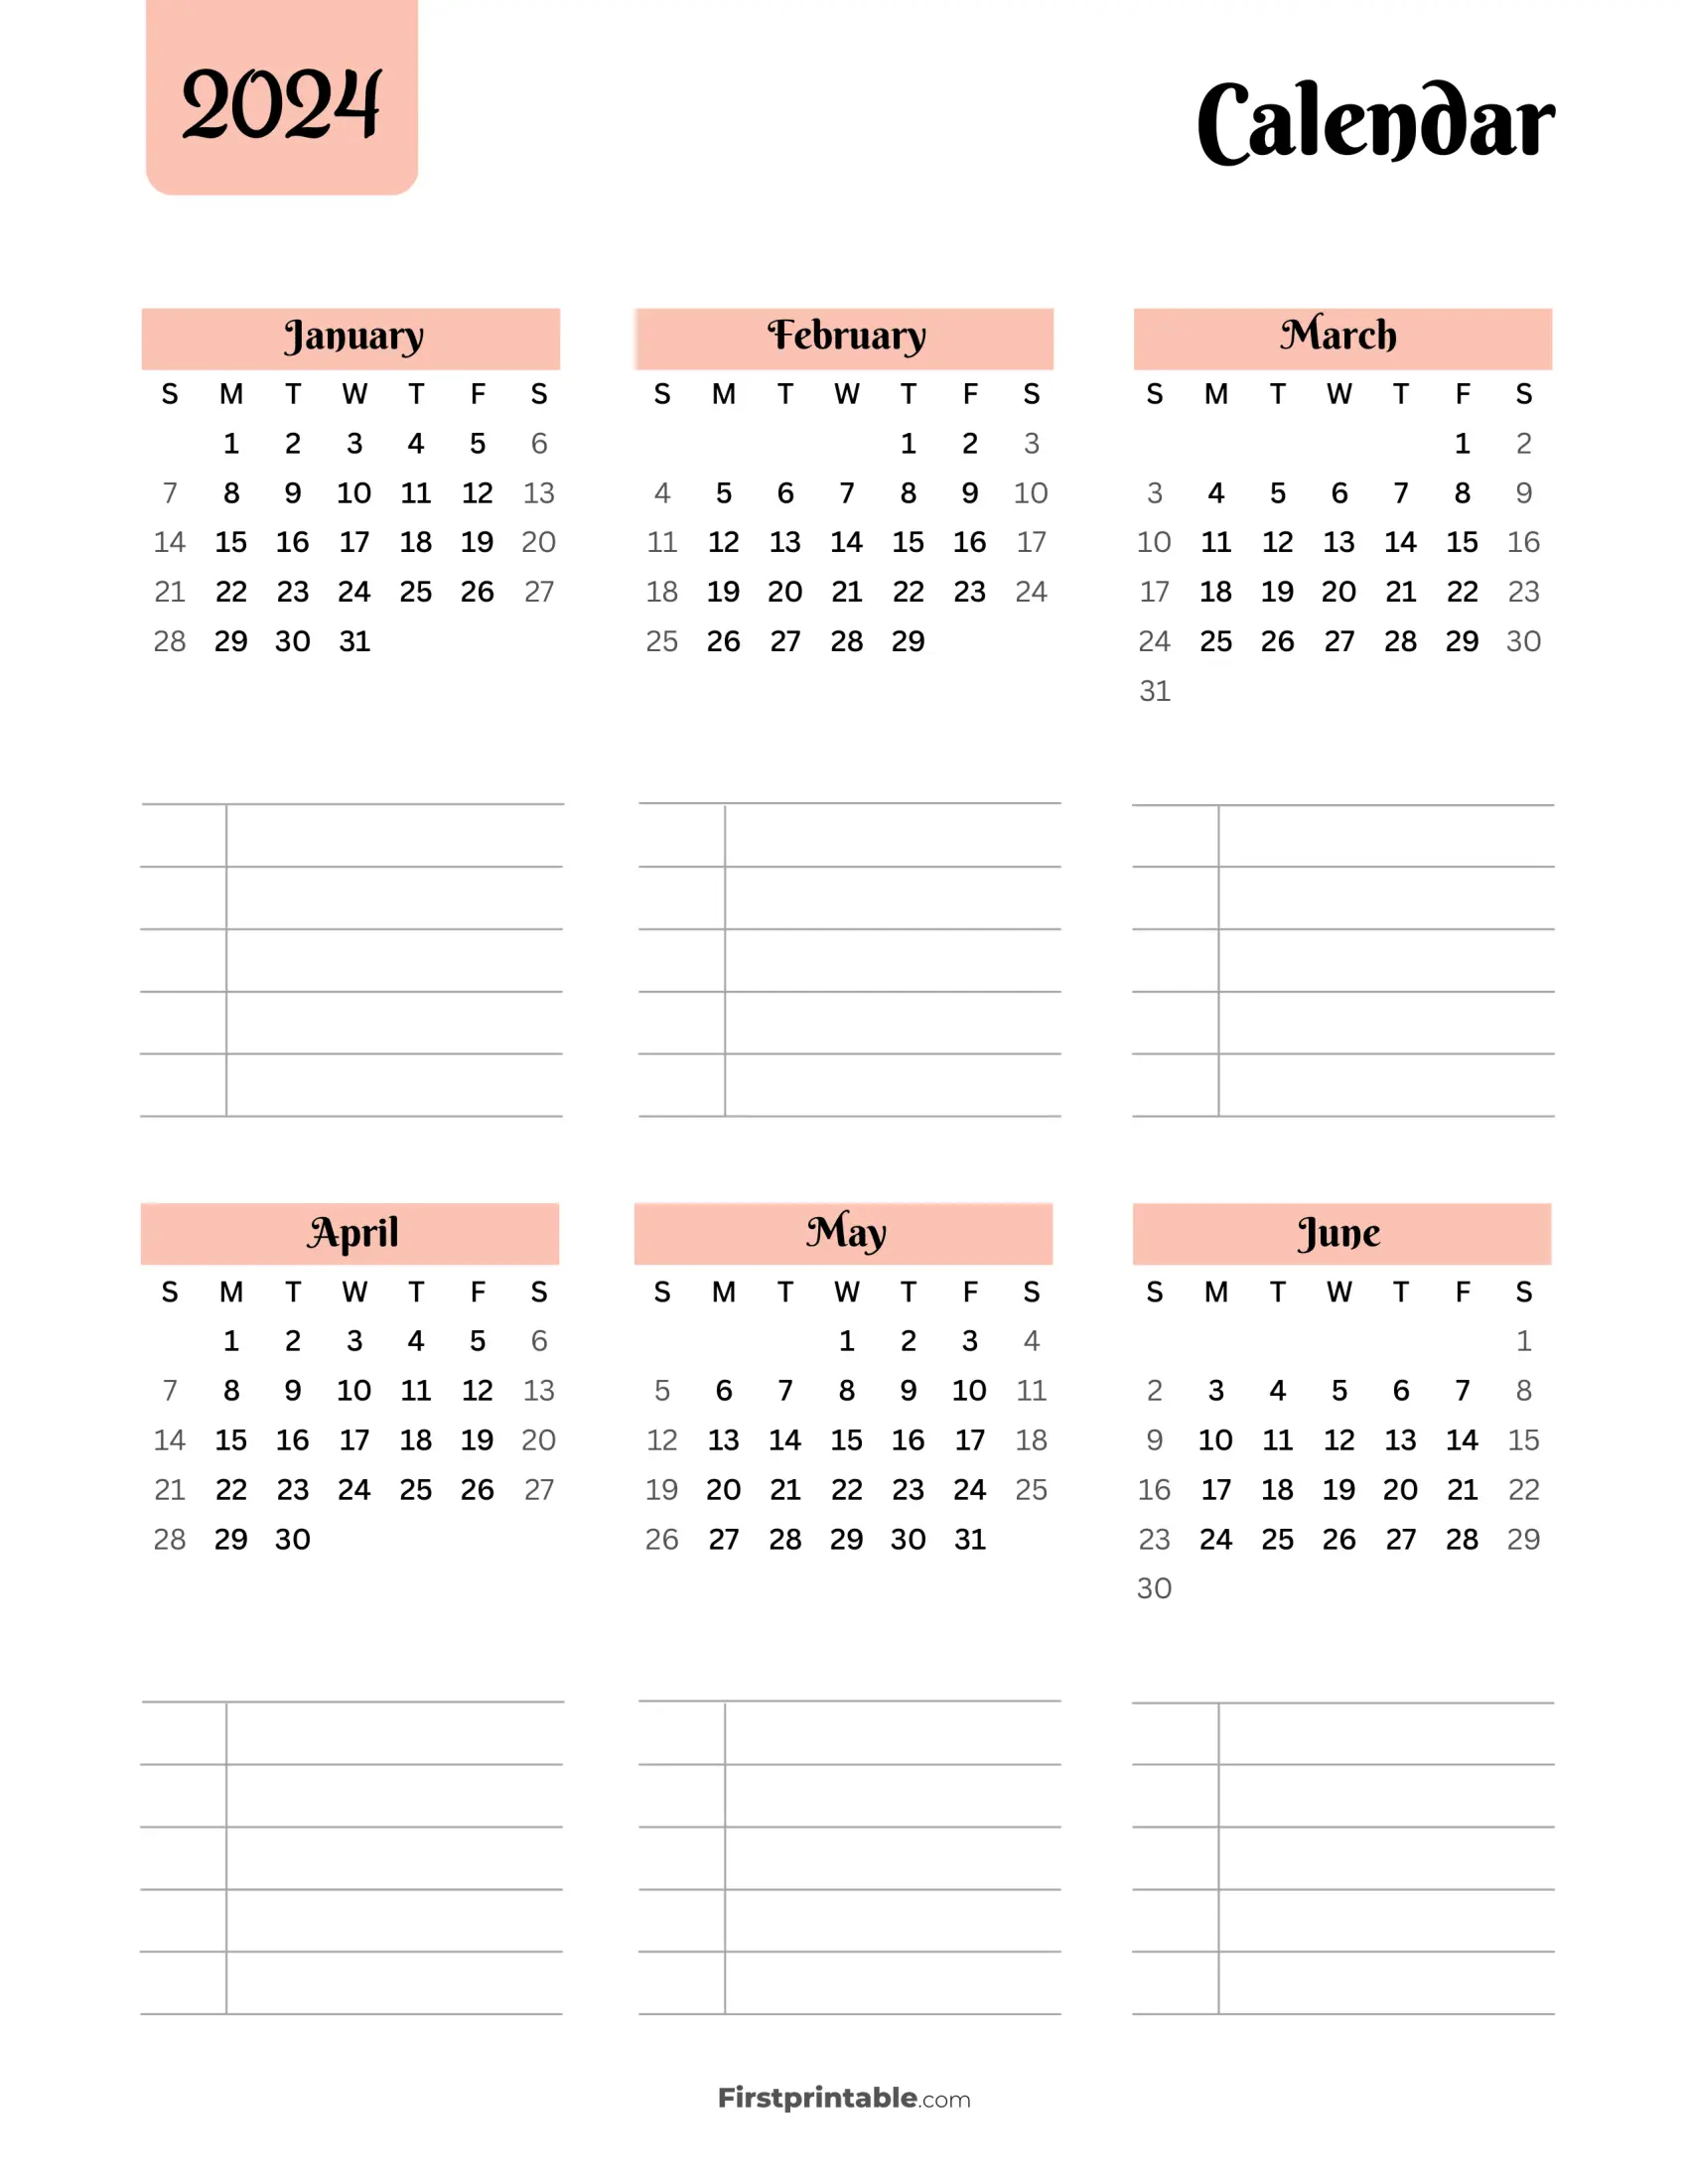 Year Calendar 2024 planner Aesthetic Jan - June